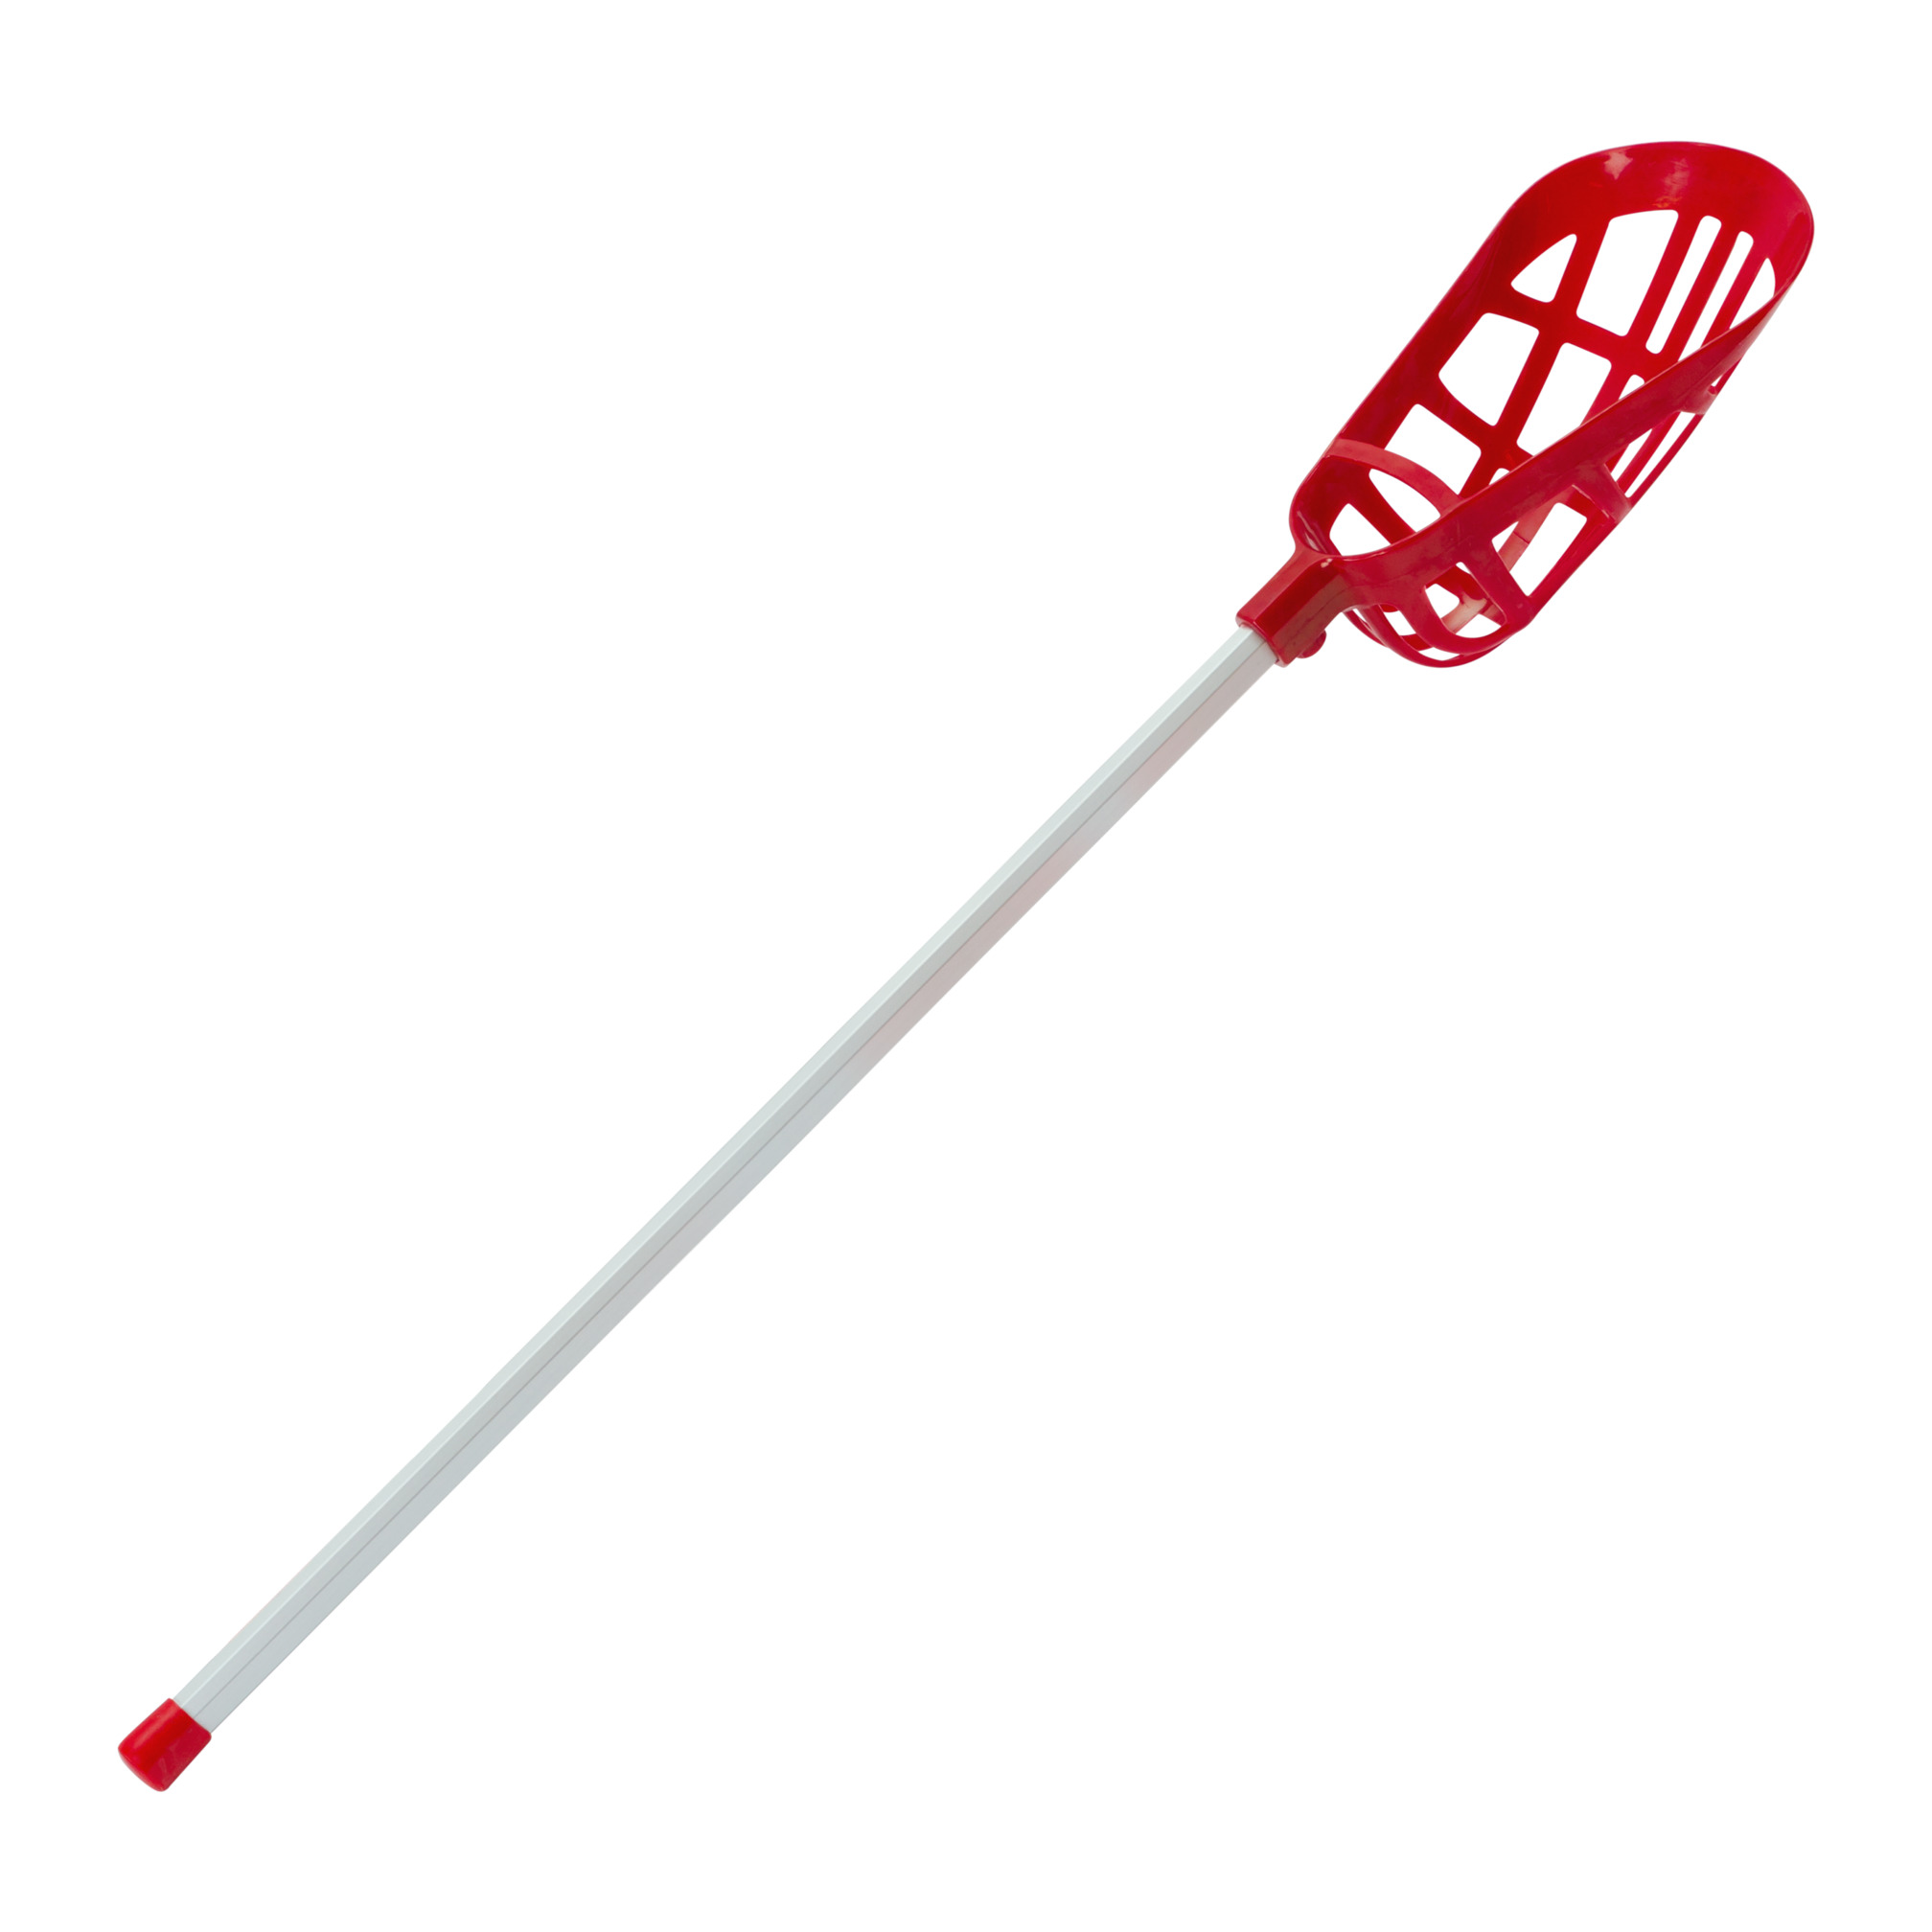 Lacrosse stick, red